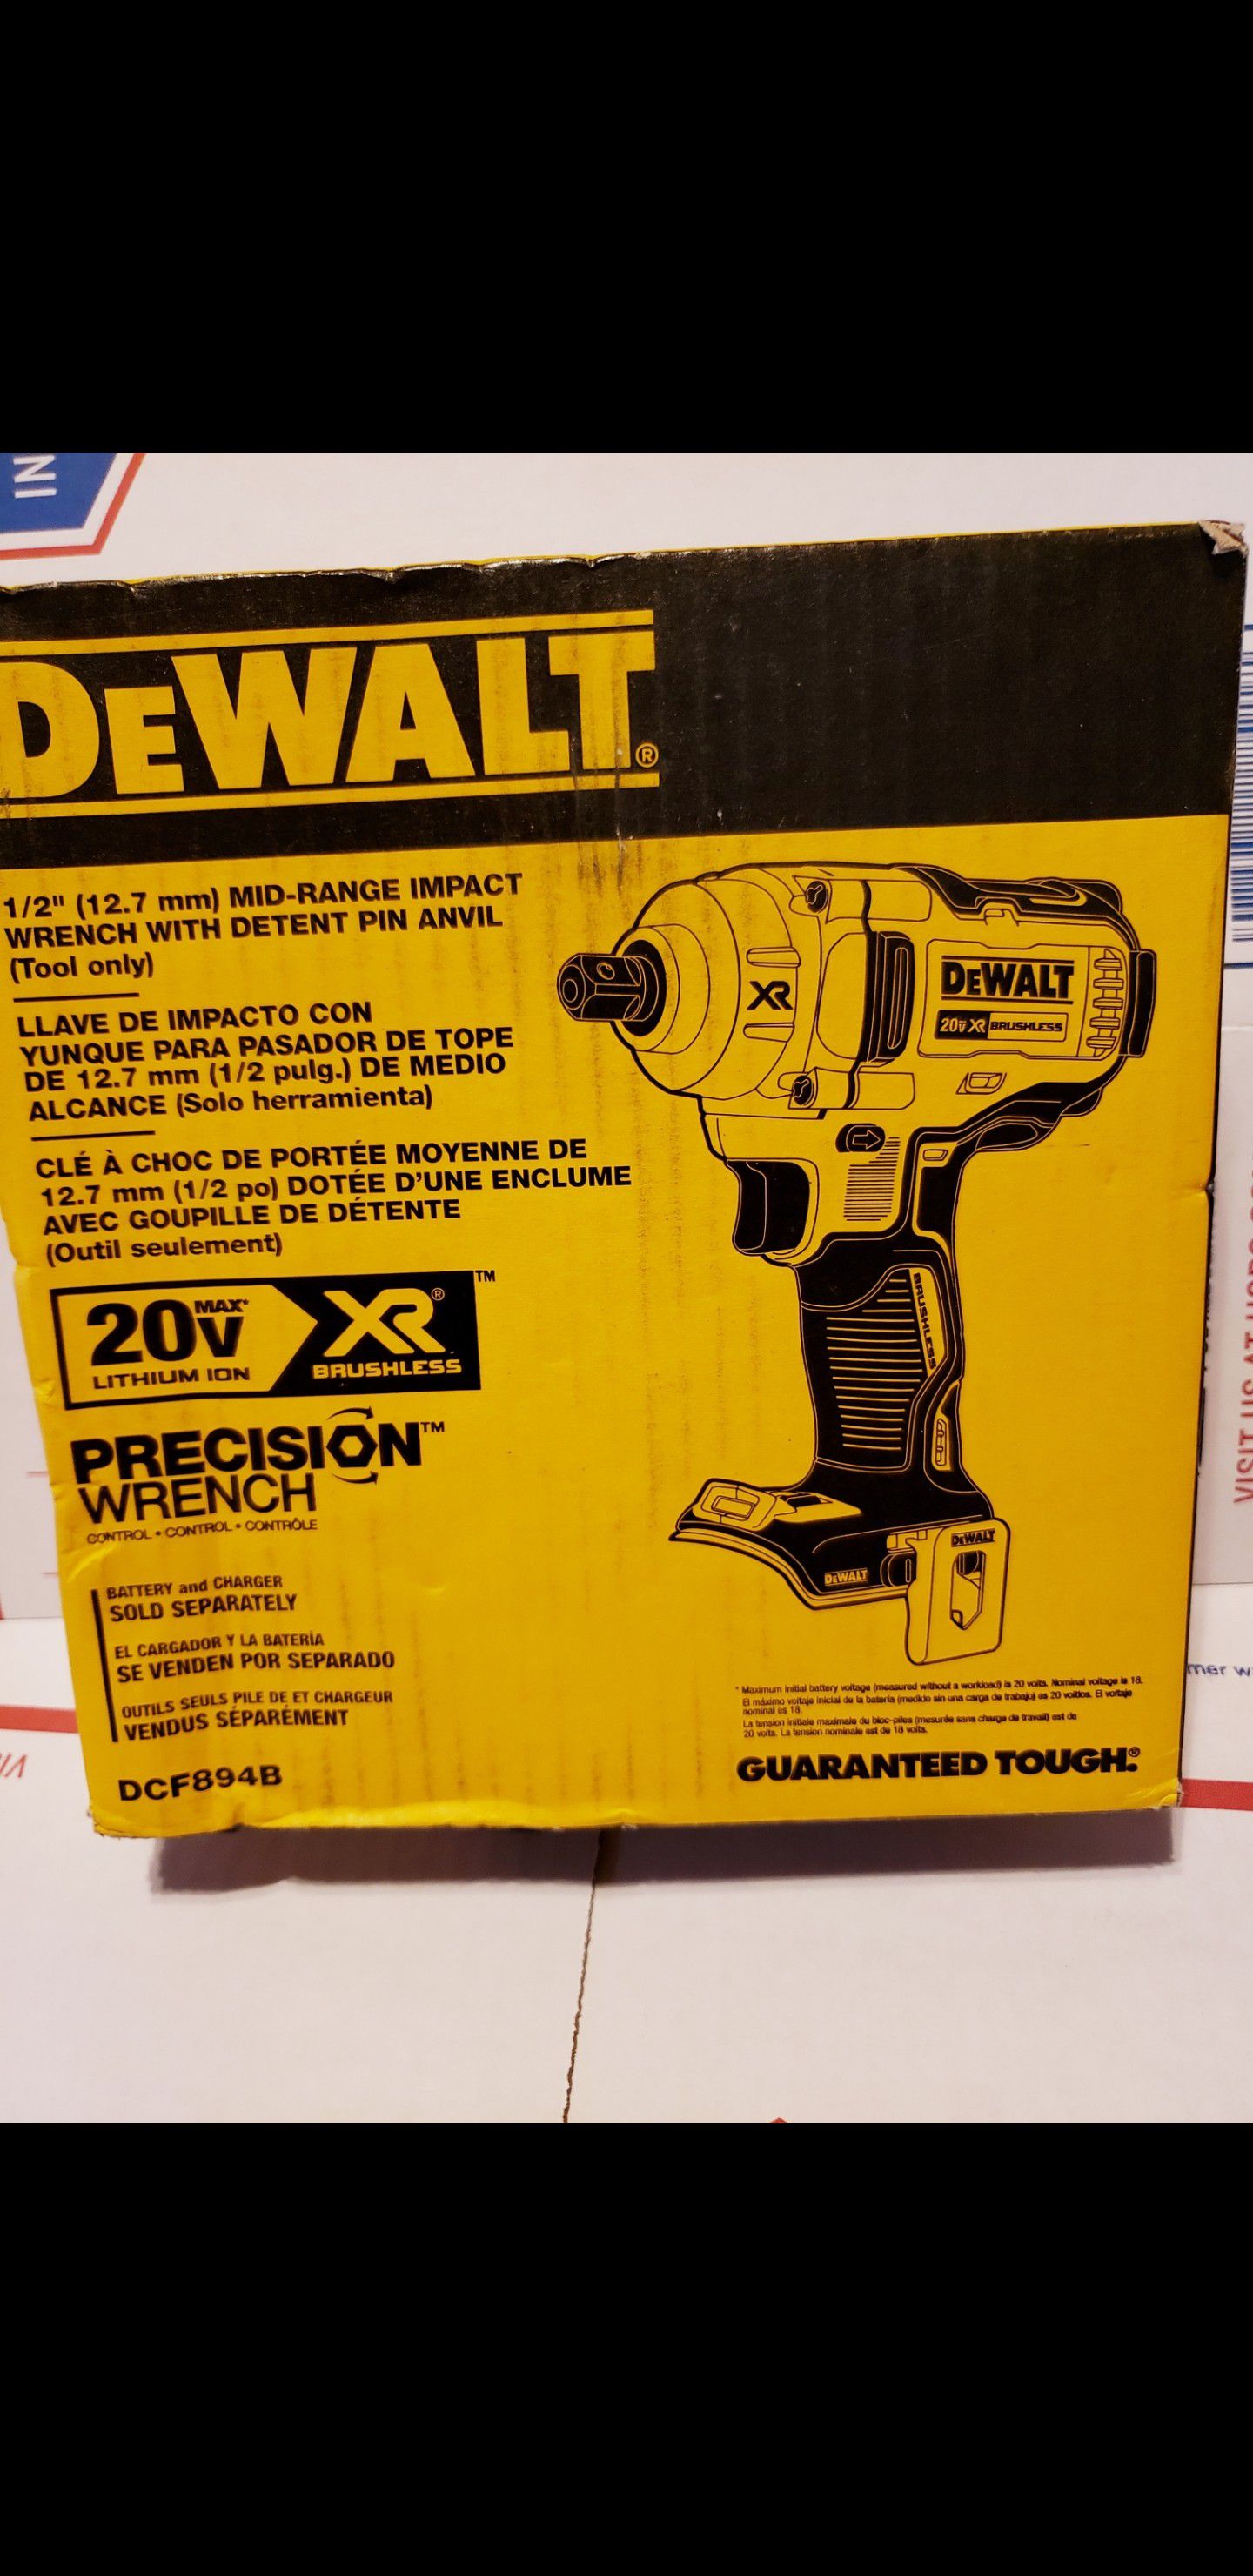 Dewalt 20v xr mid-range 1/2" impact wrench. Tool-only